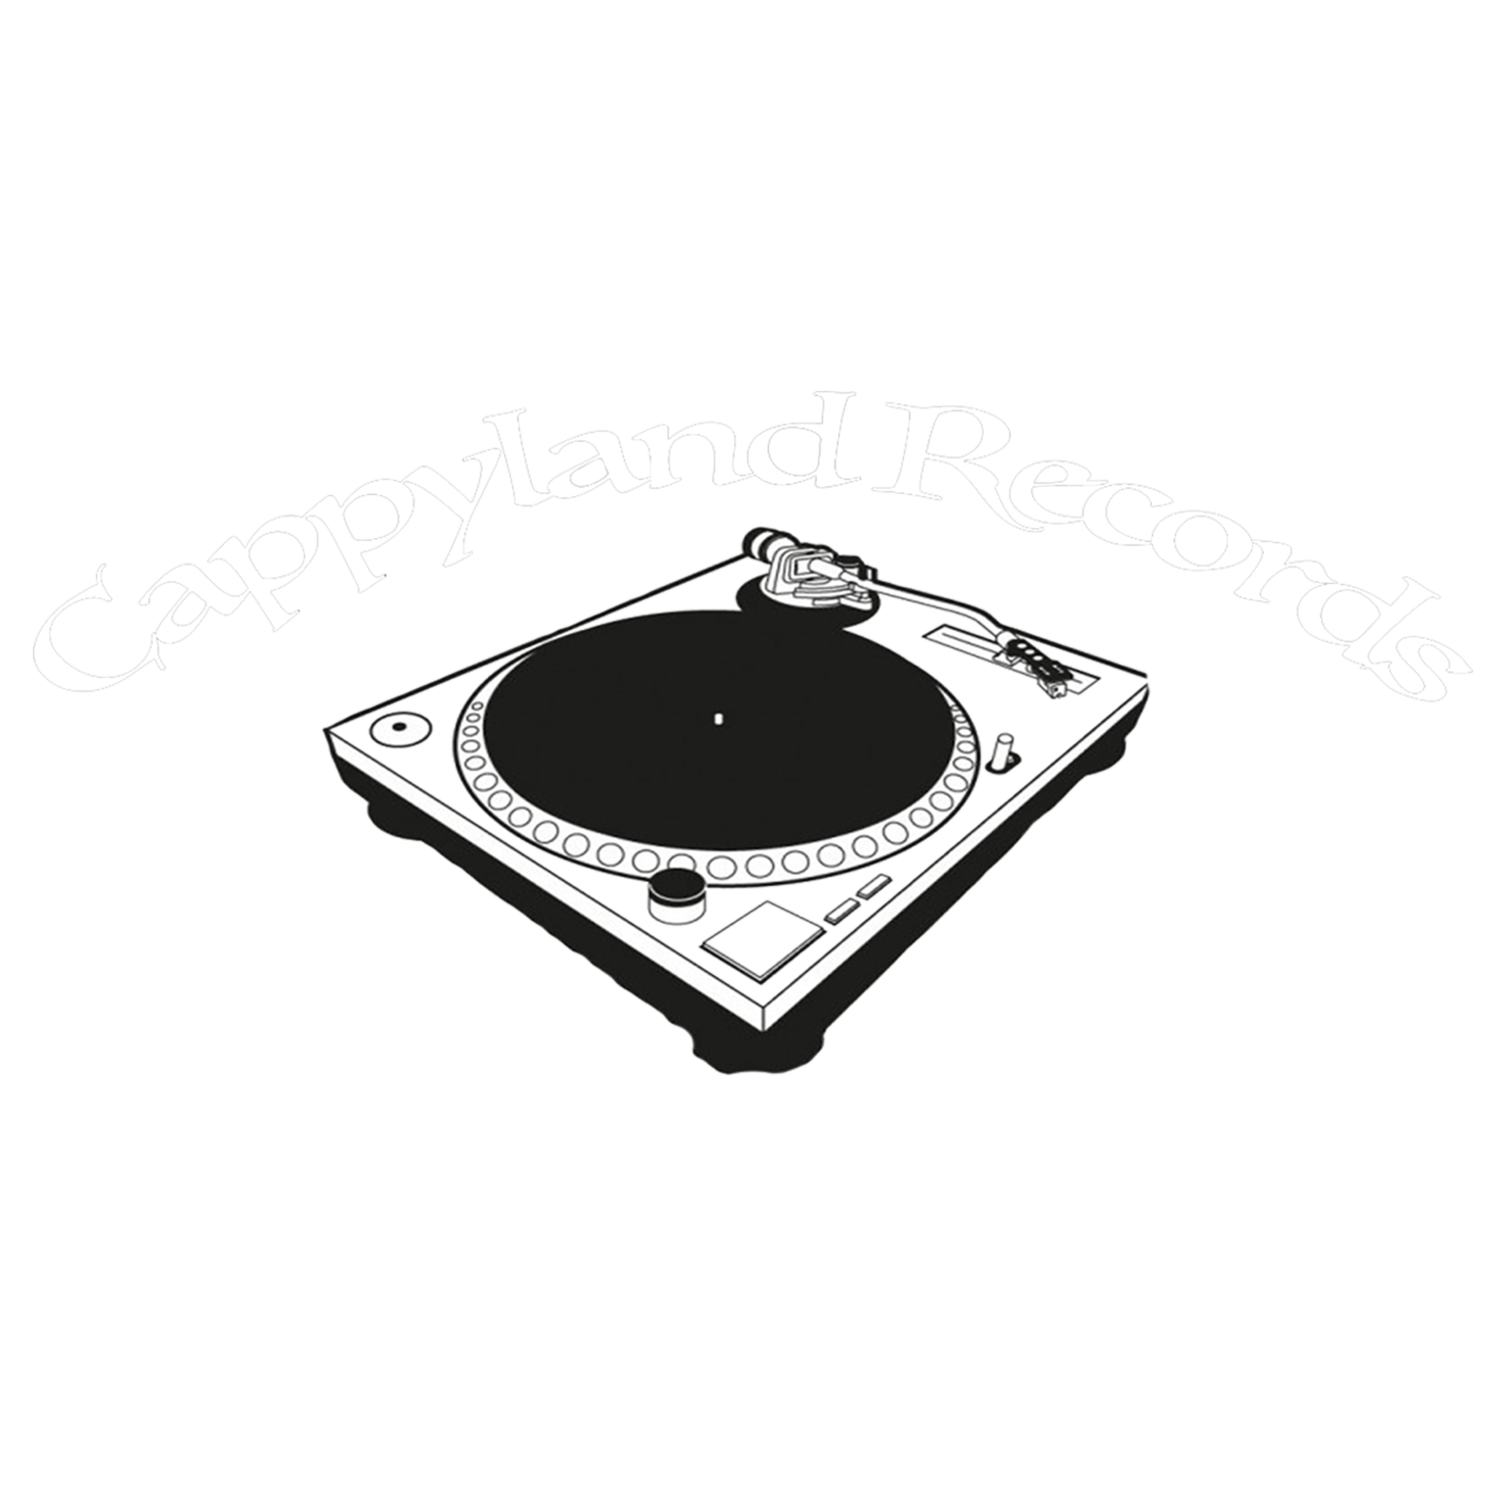 Cappyland Records